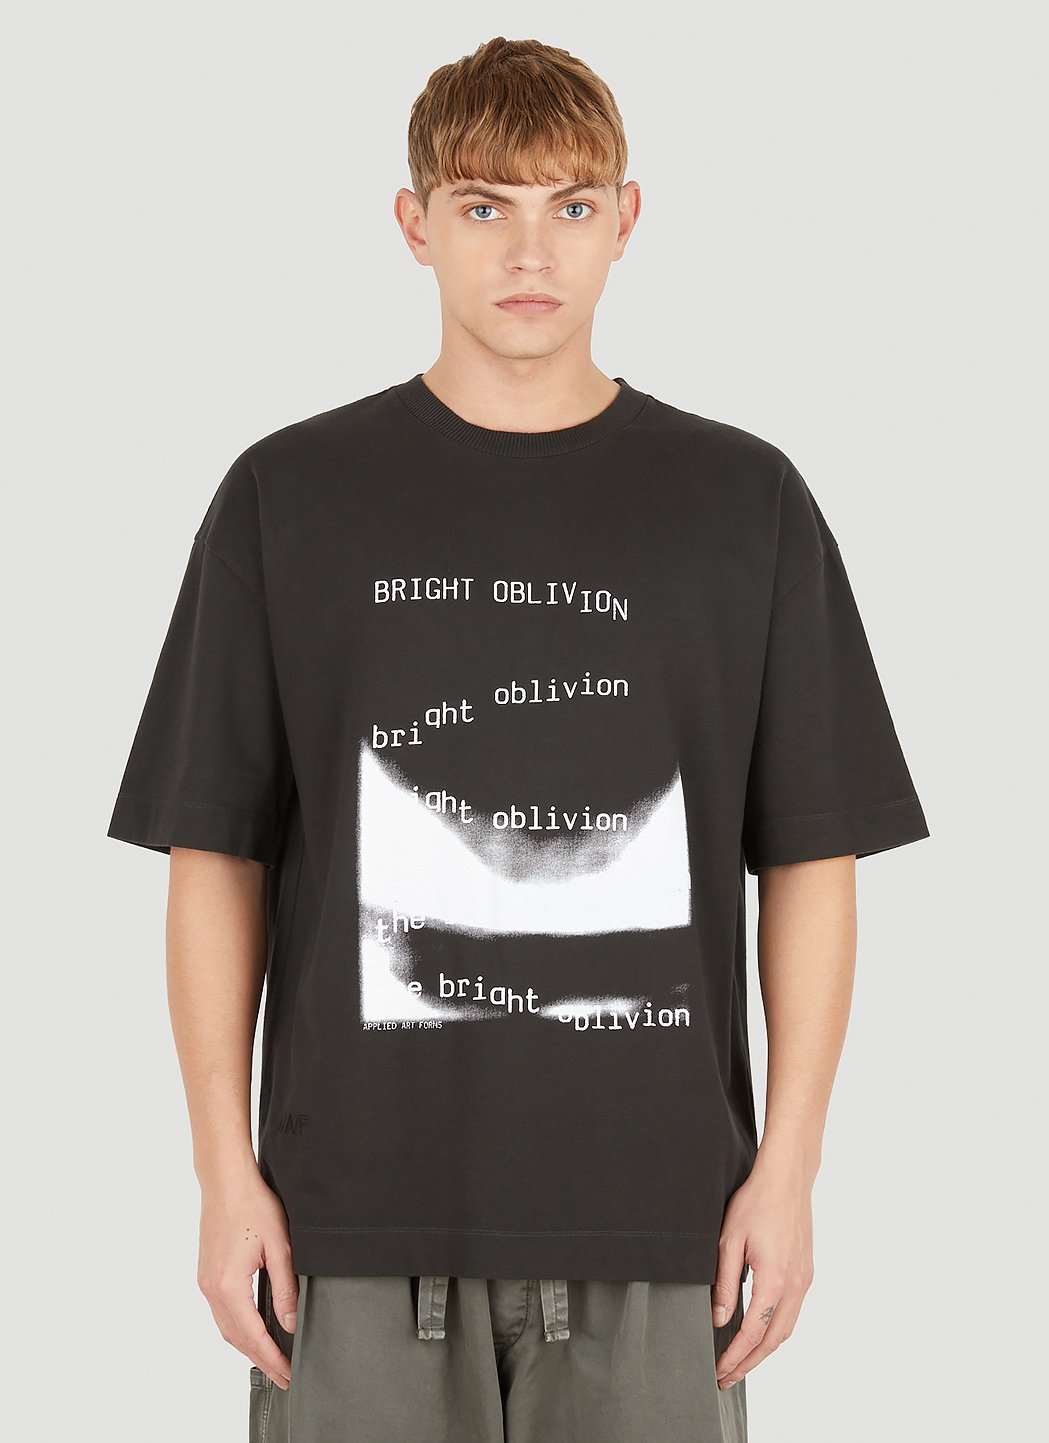 Applied Art Forms Oblivion T-Shirt